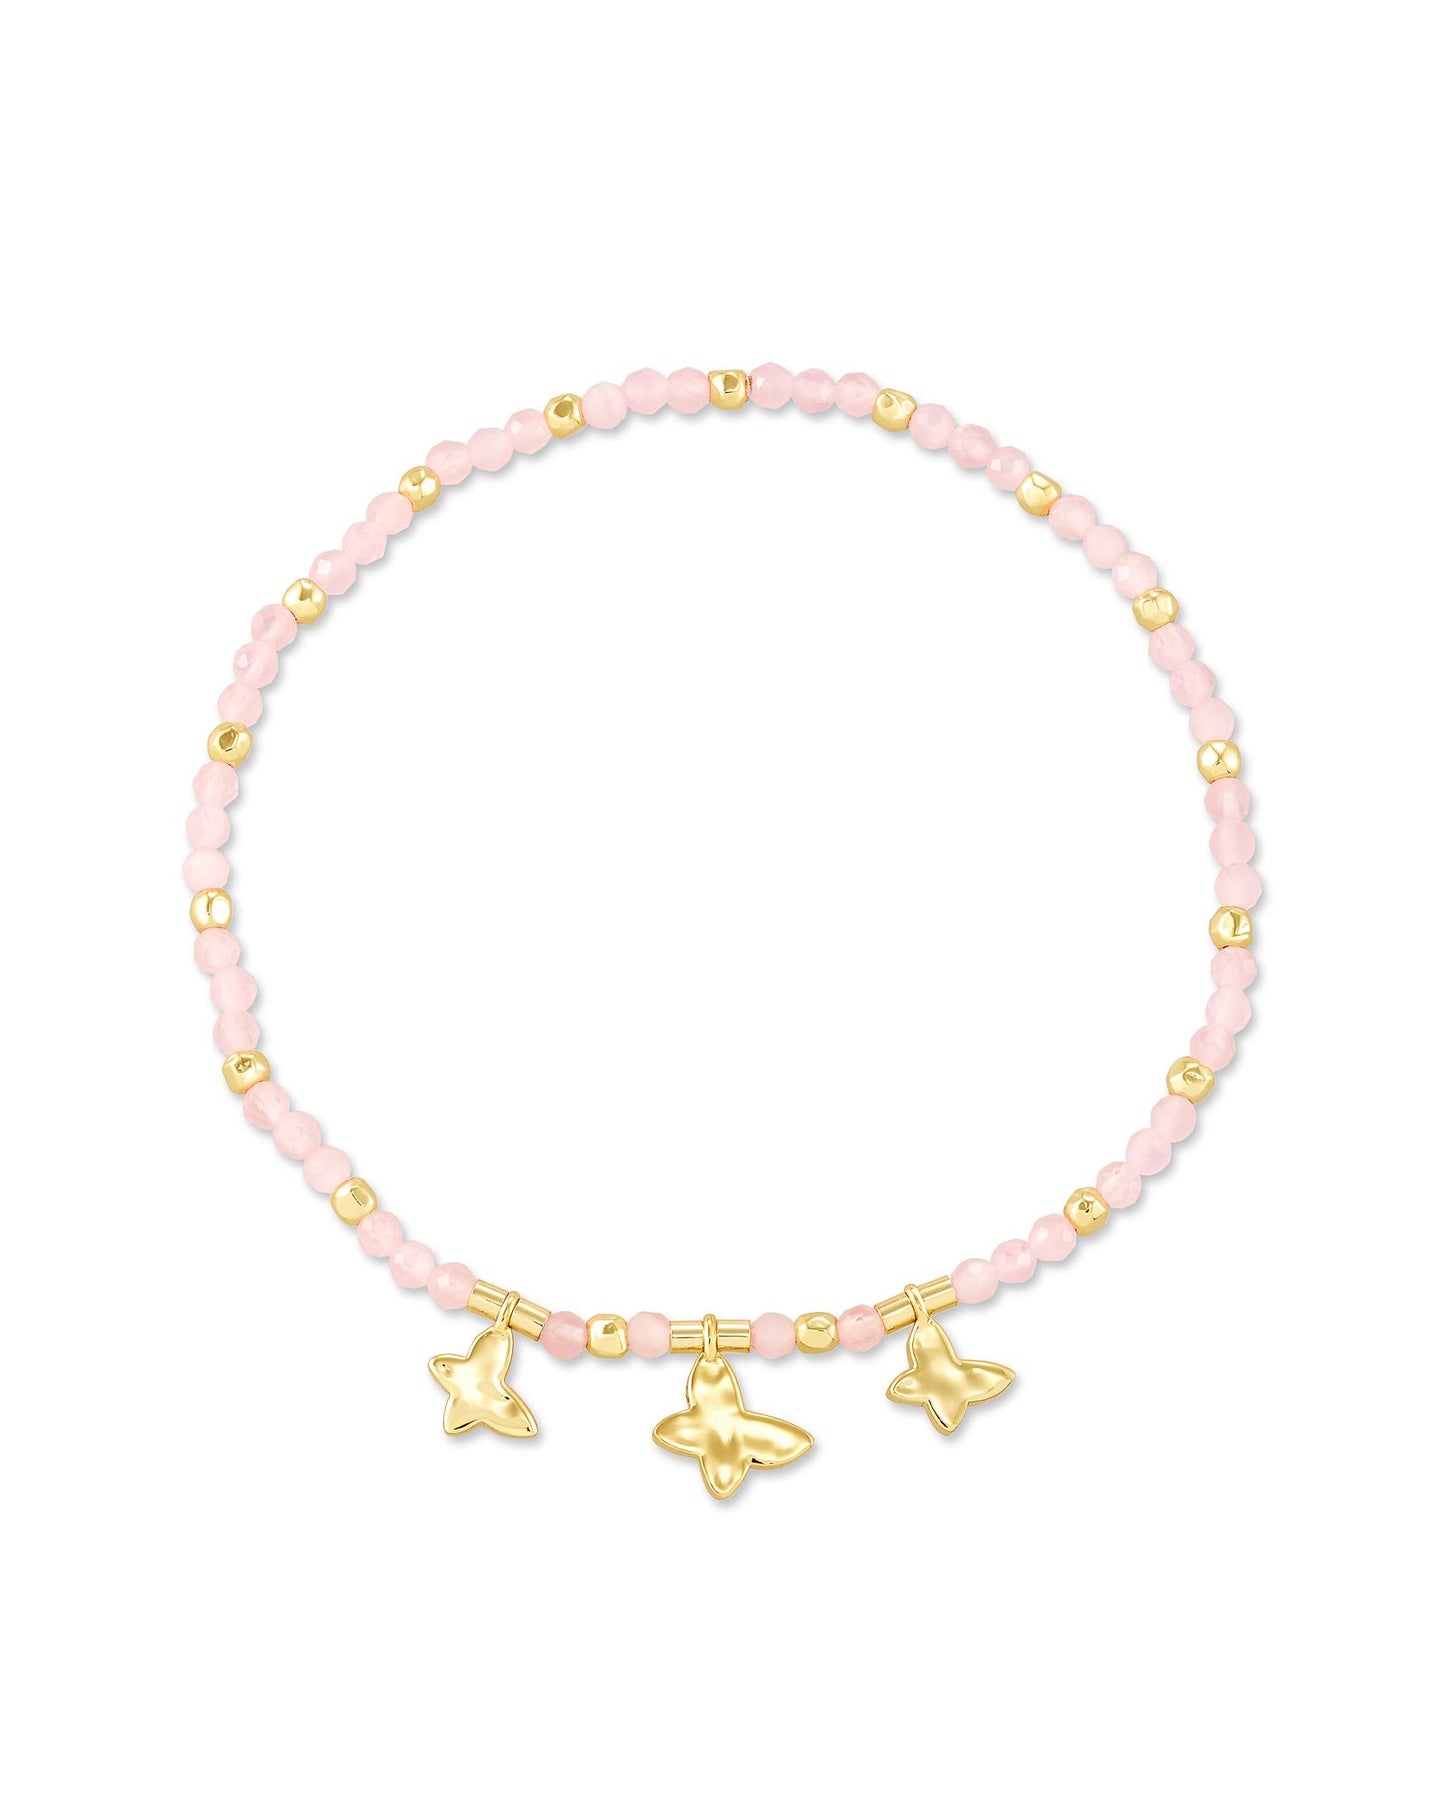 Lillia Butterfly Gold Stretch Bracelet in Pink Cats Eye